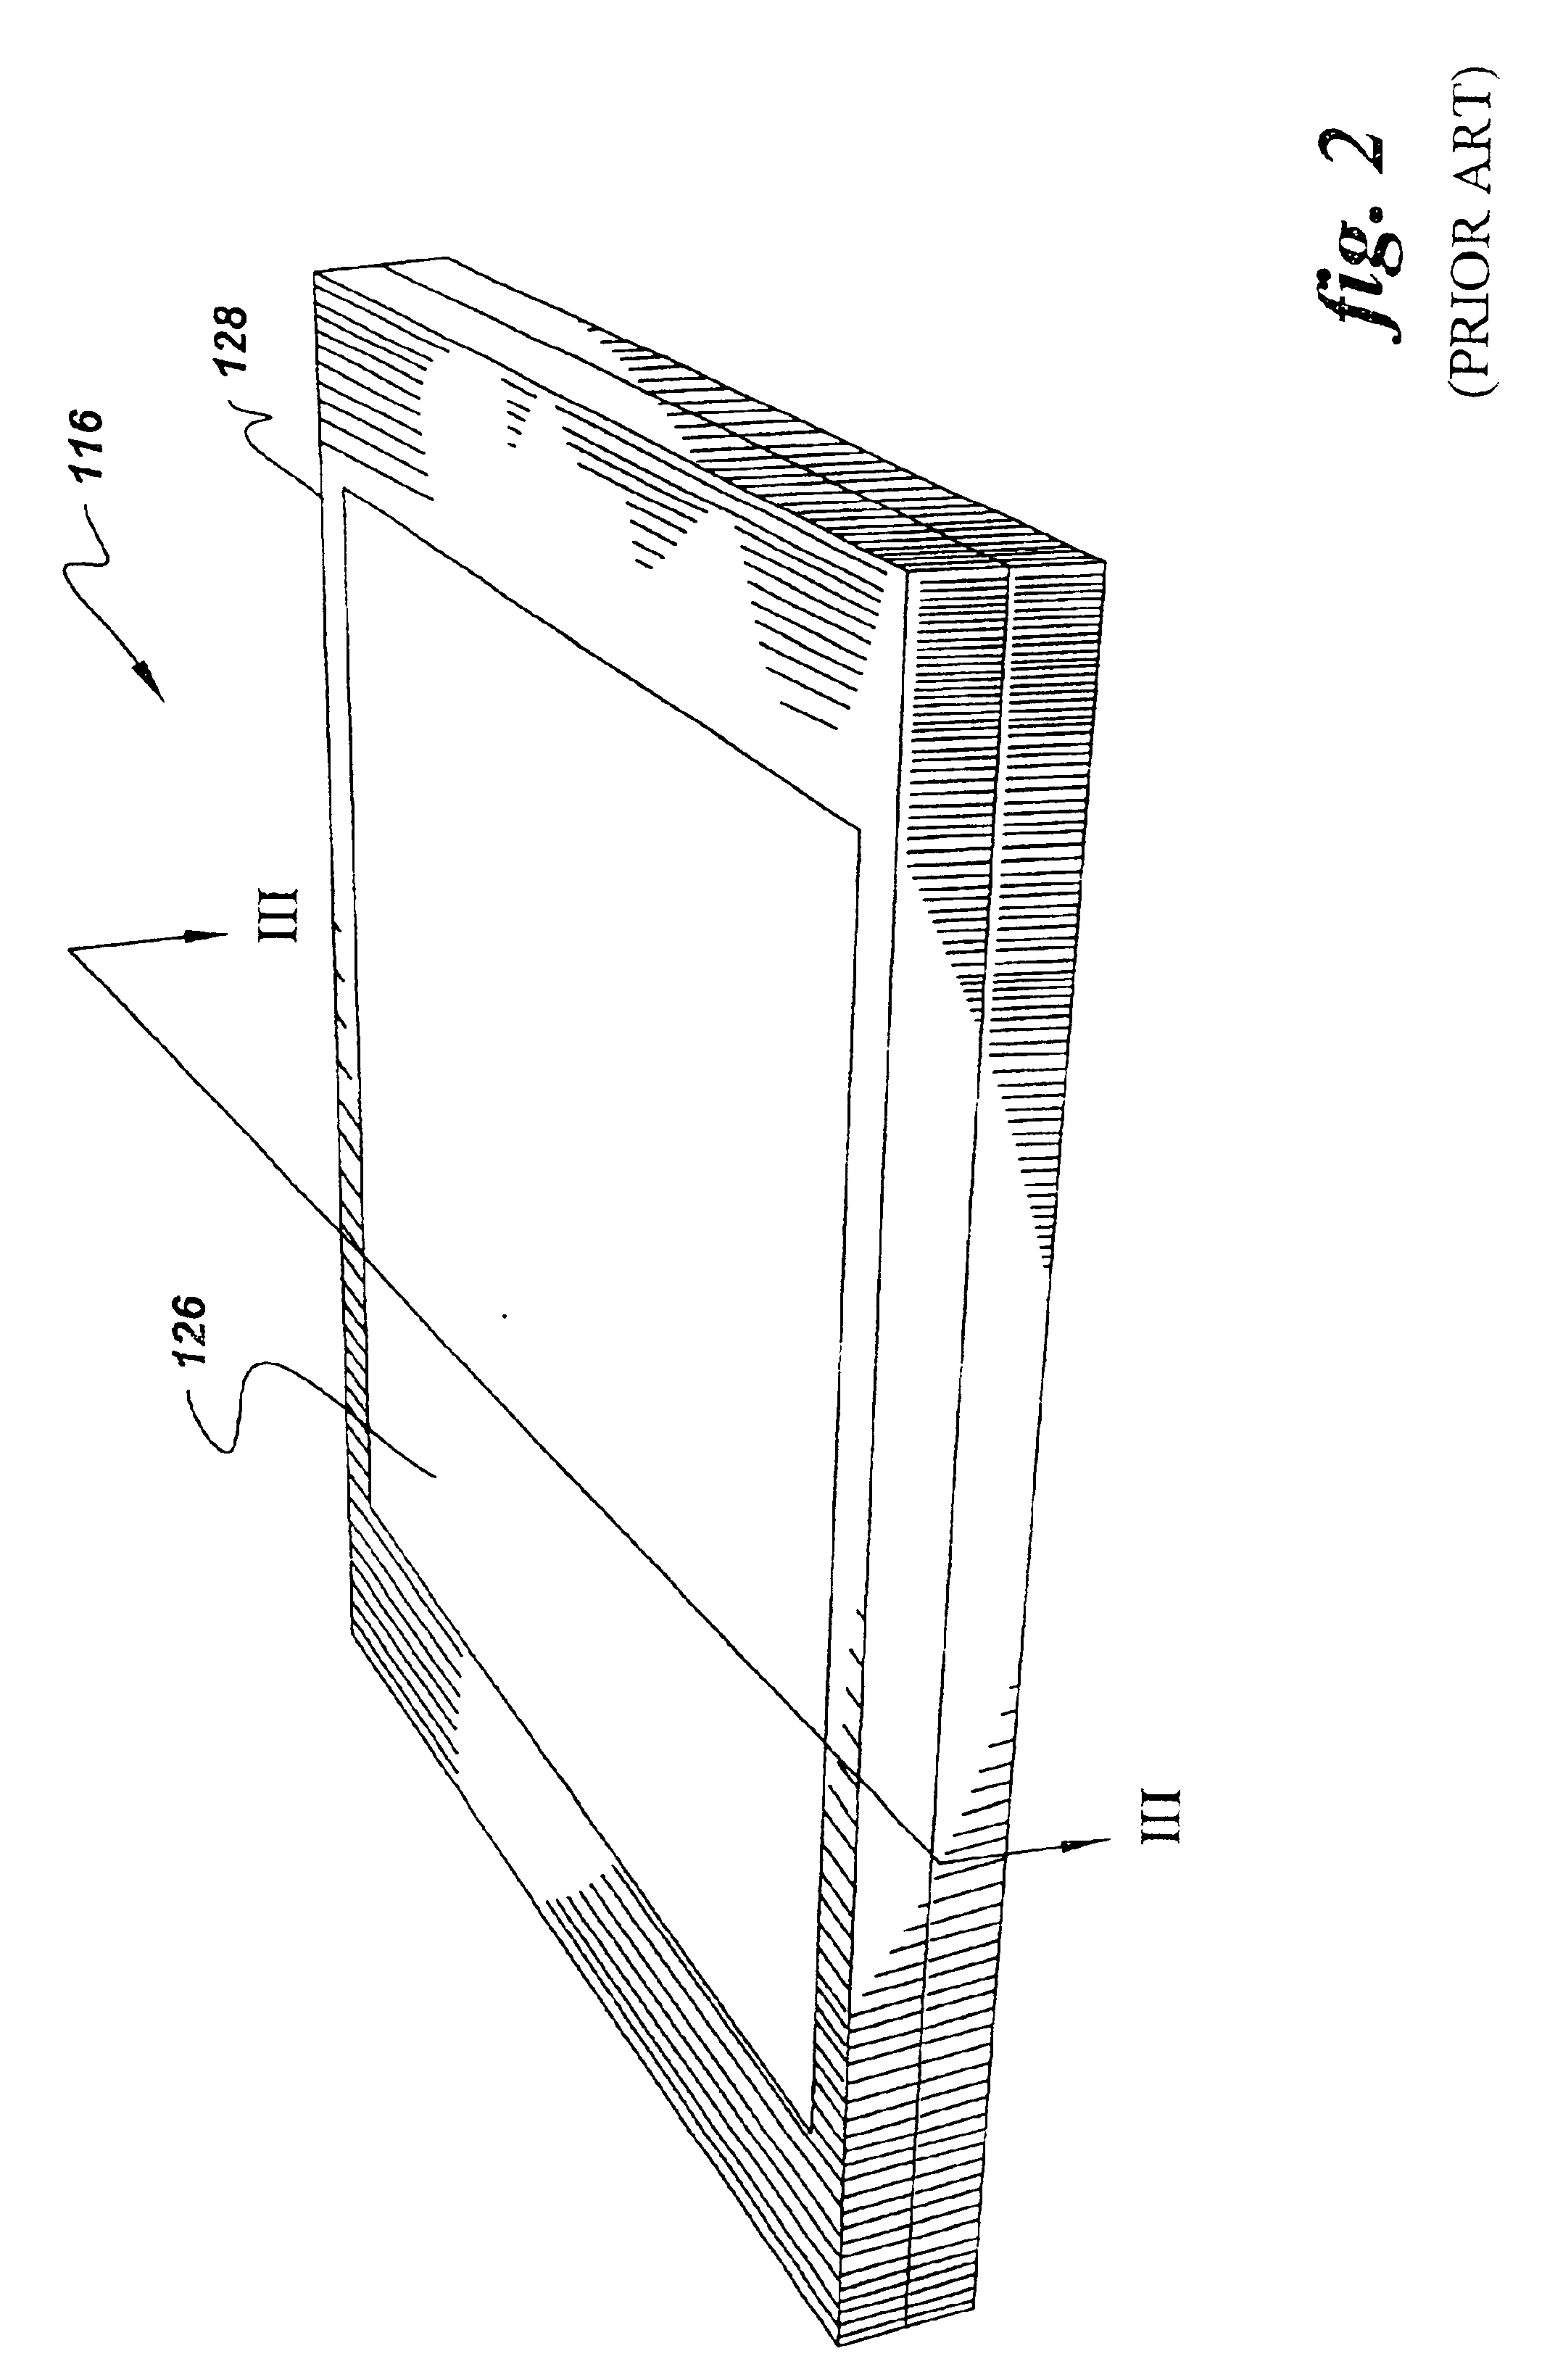 Indirect programming of detector framing node